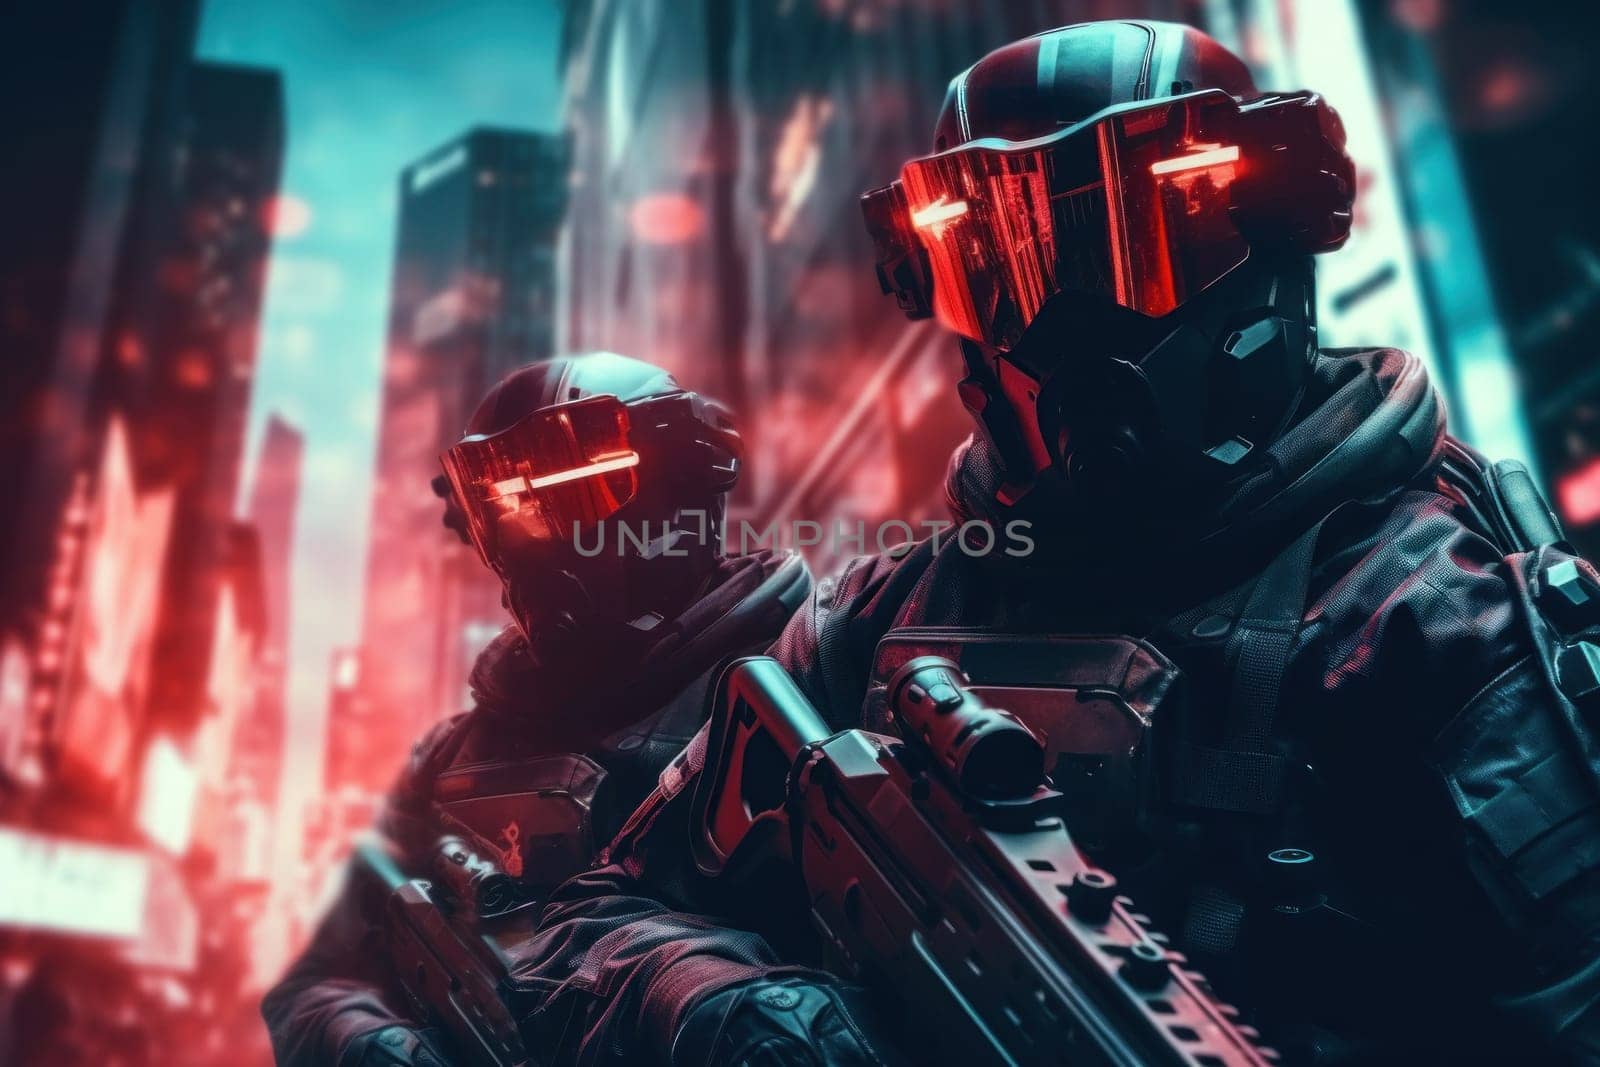 Futuristic special force soldiers, Cyberpunk warrior portrait in neon light background by nijieimu